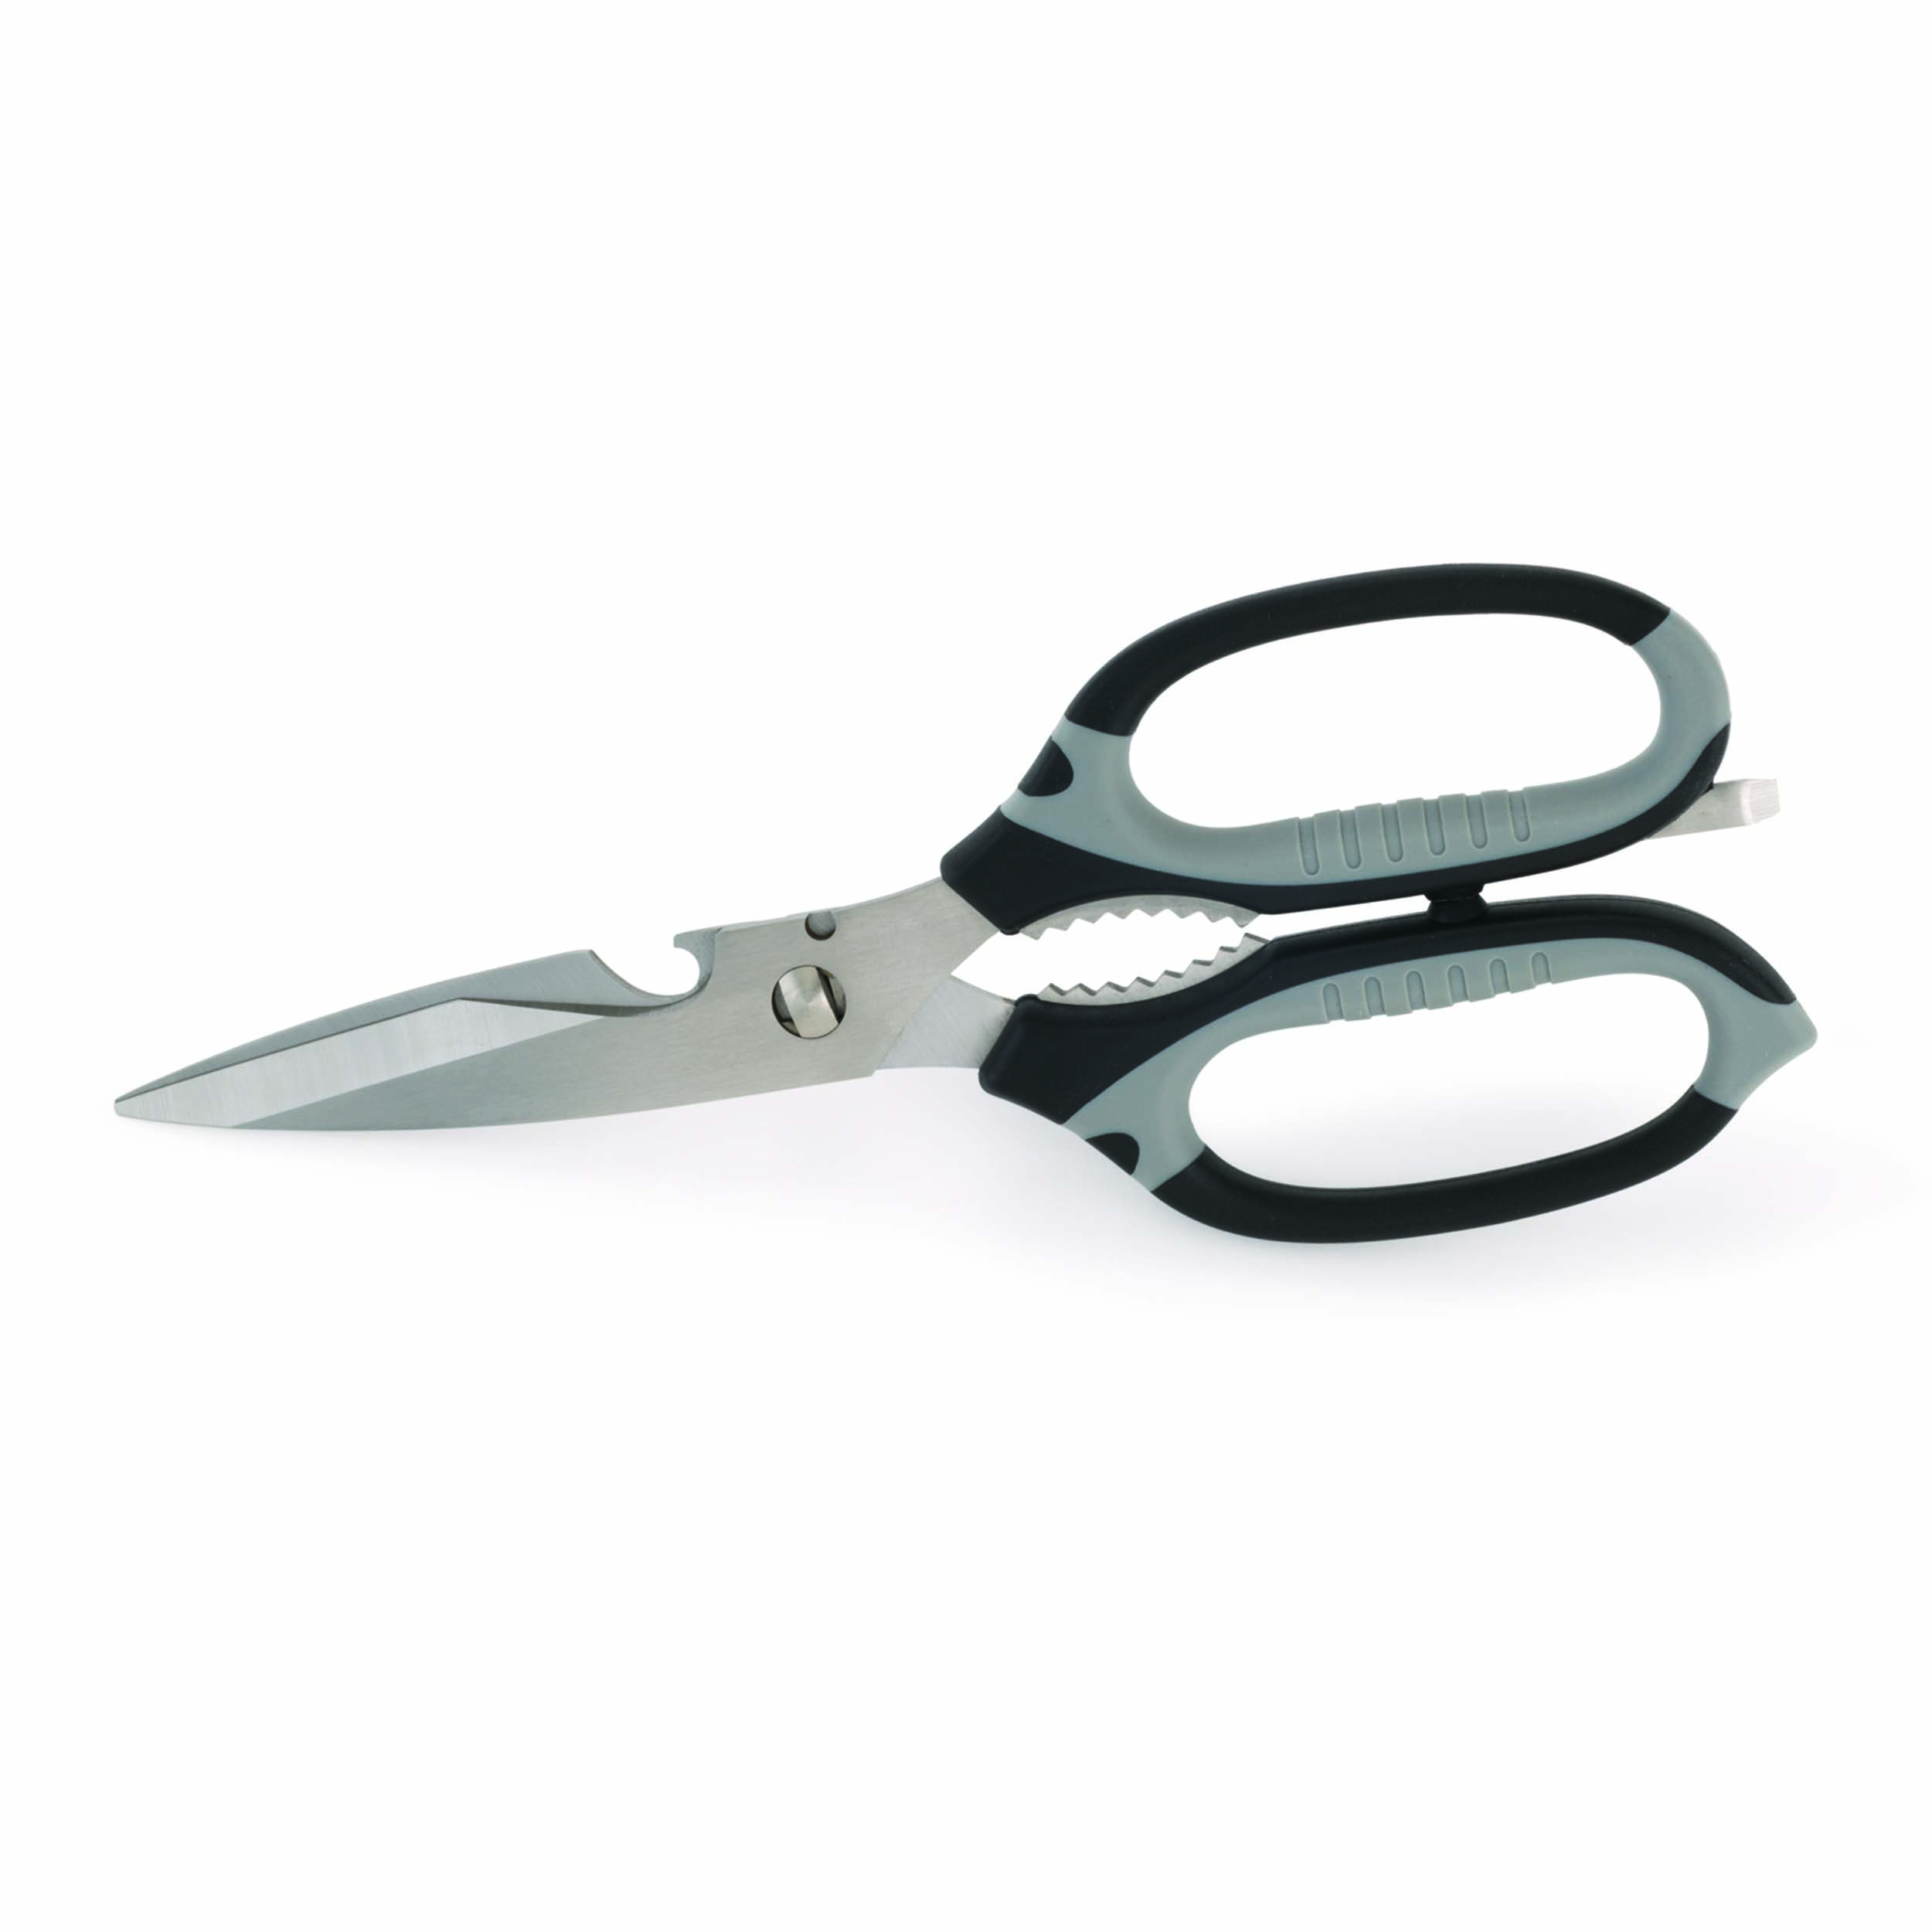 Stainless Steel Multi-function Scissors